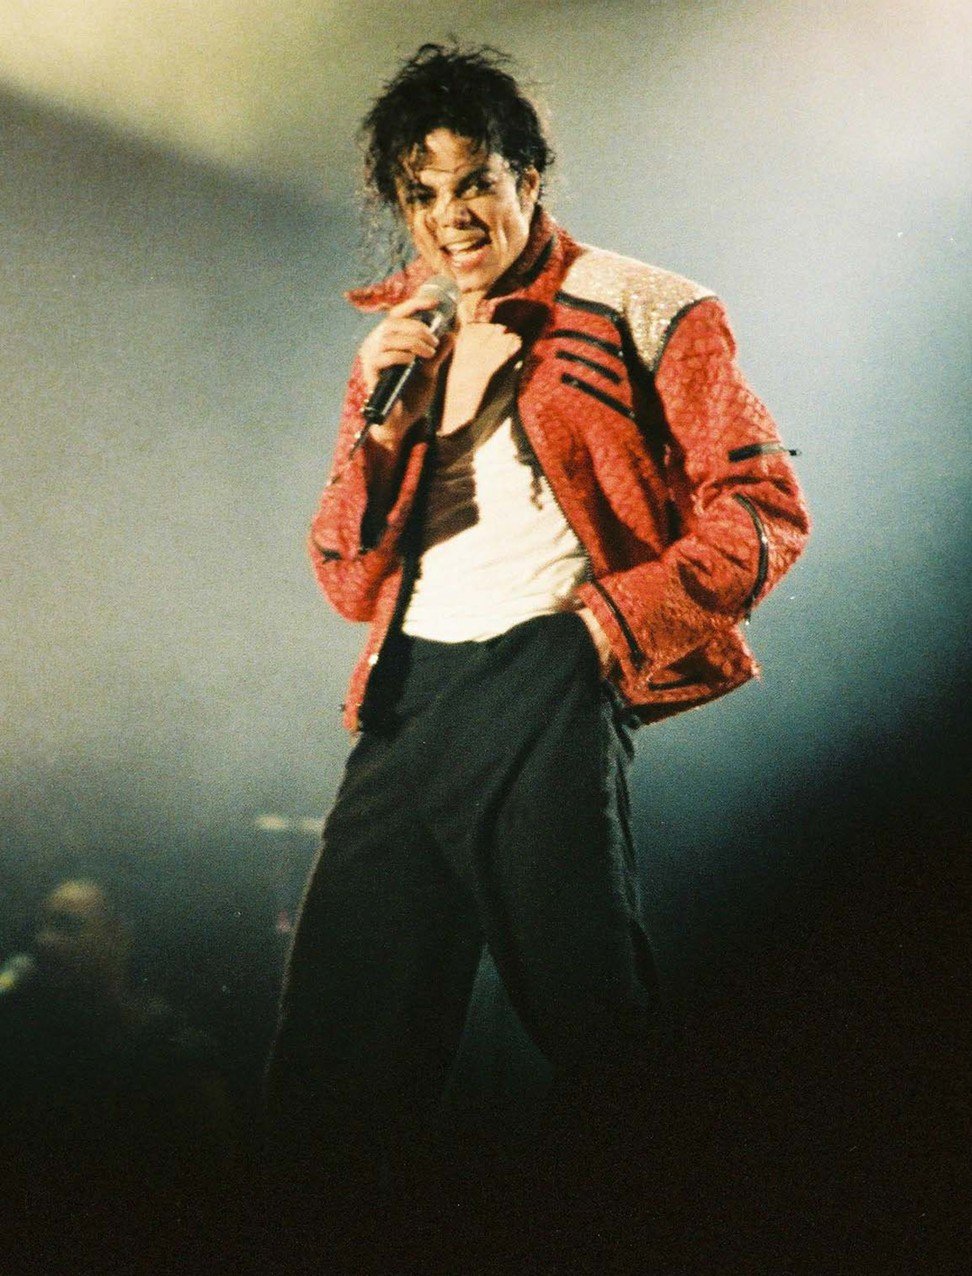 Michael Jackson Billie Jean Motown Glove Adult - Halloween Costume